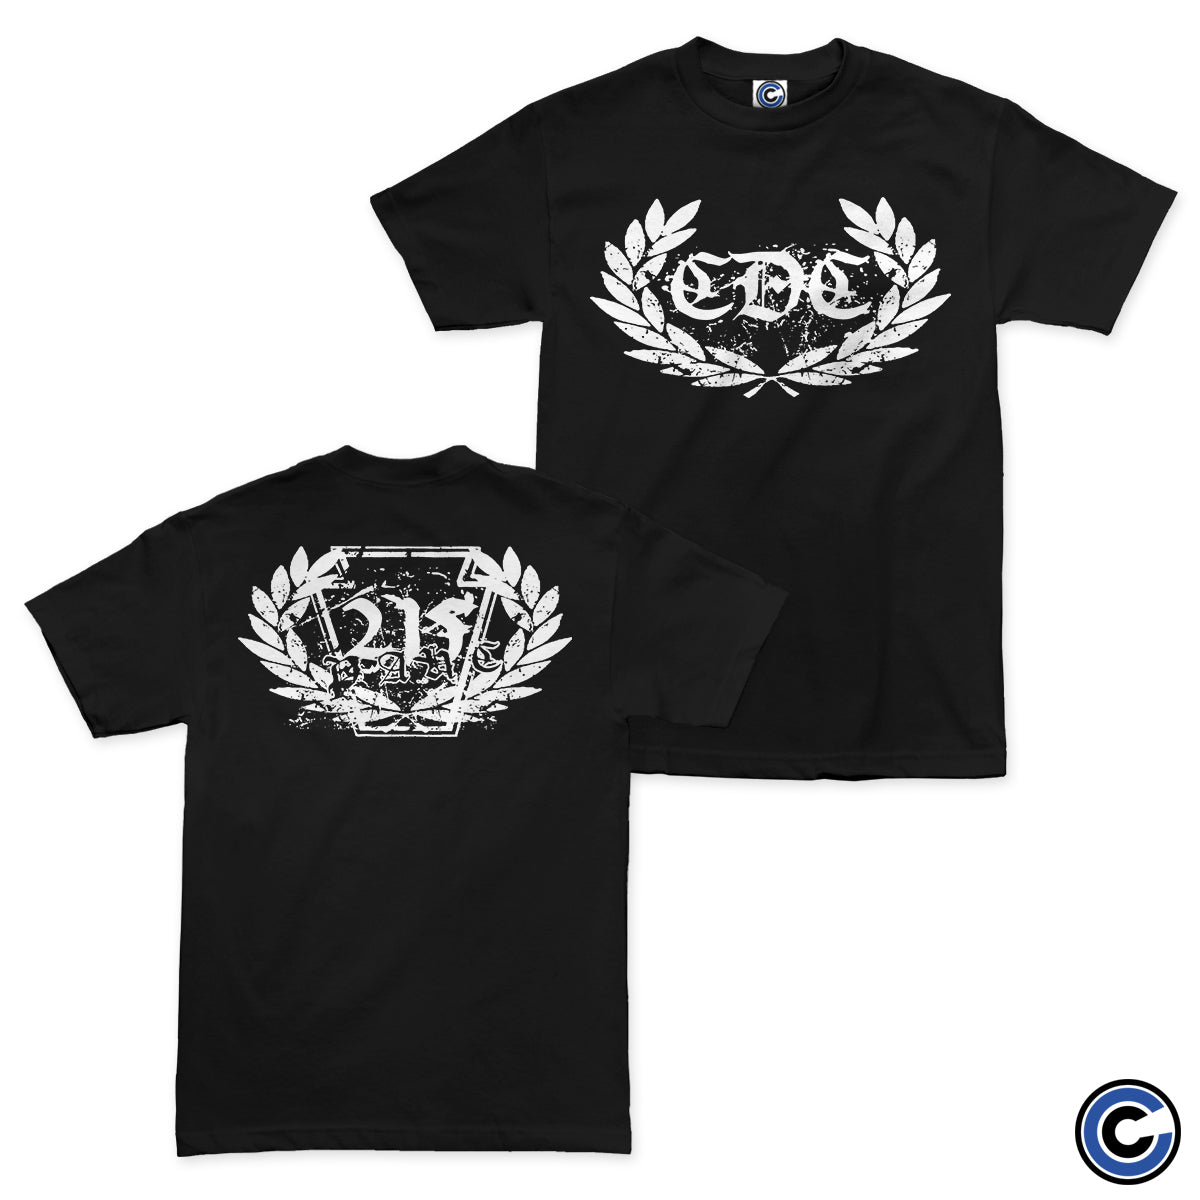 CDC "Crest" Black Shirt